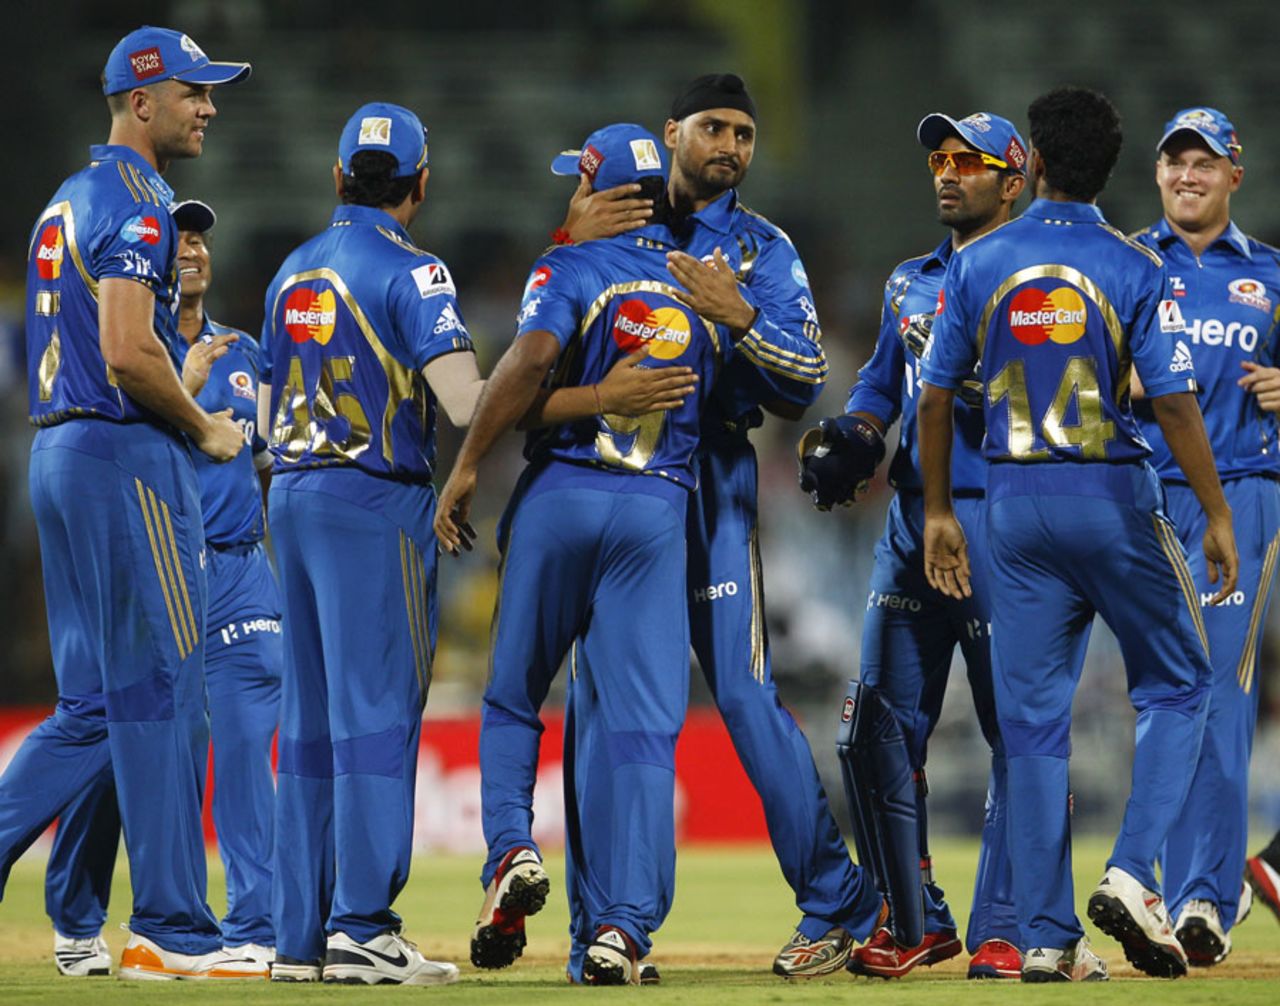 Mumbai Indians get together after an early wicket, Super Kings v Mumbai Indians, IPL 2012, Chennai, April 4, 2012